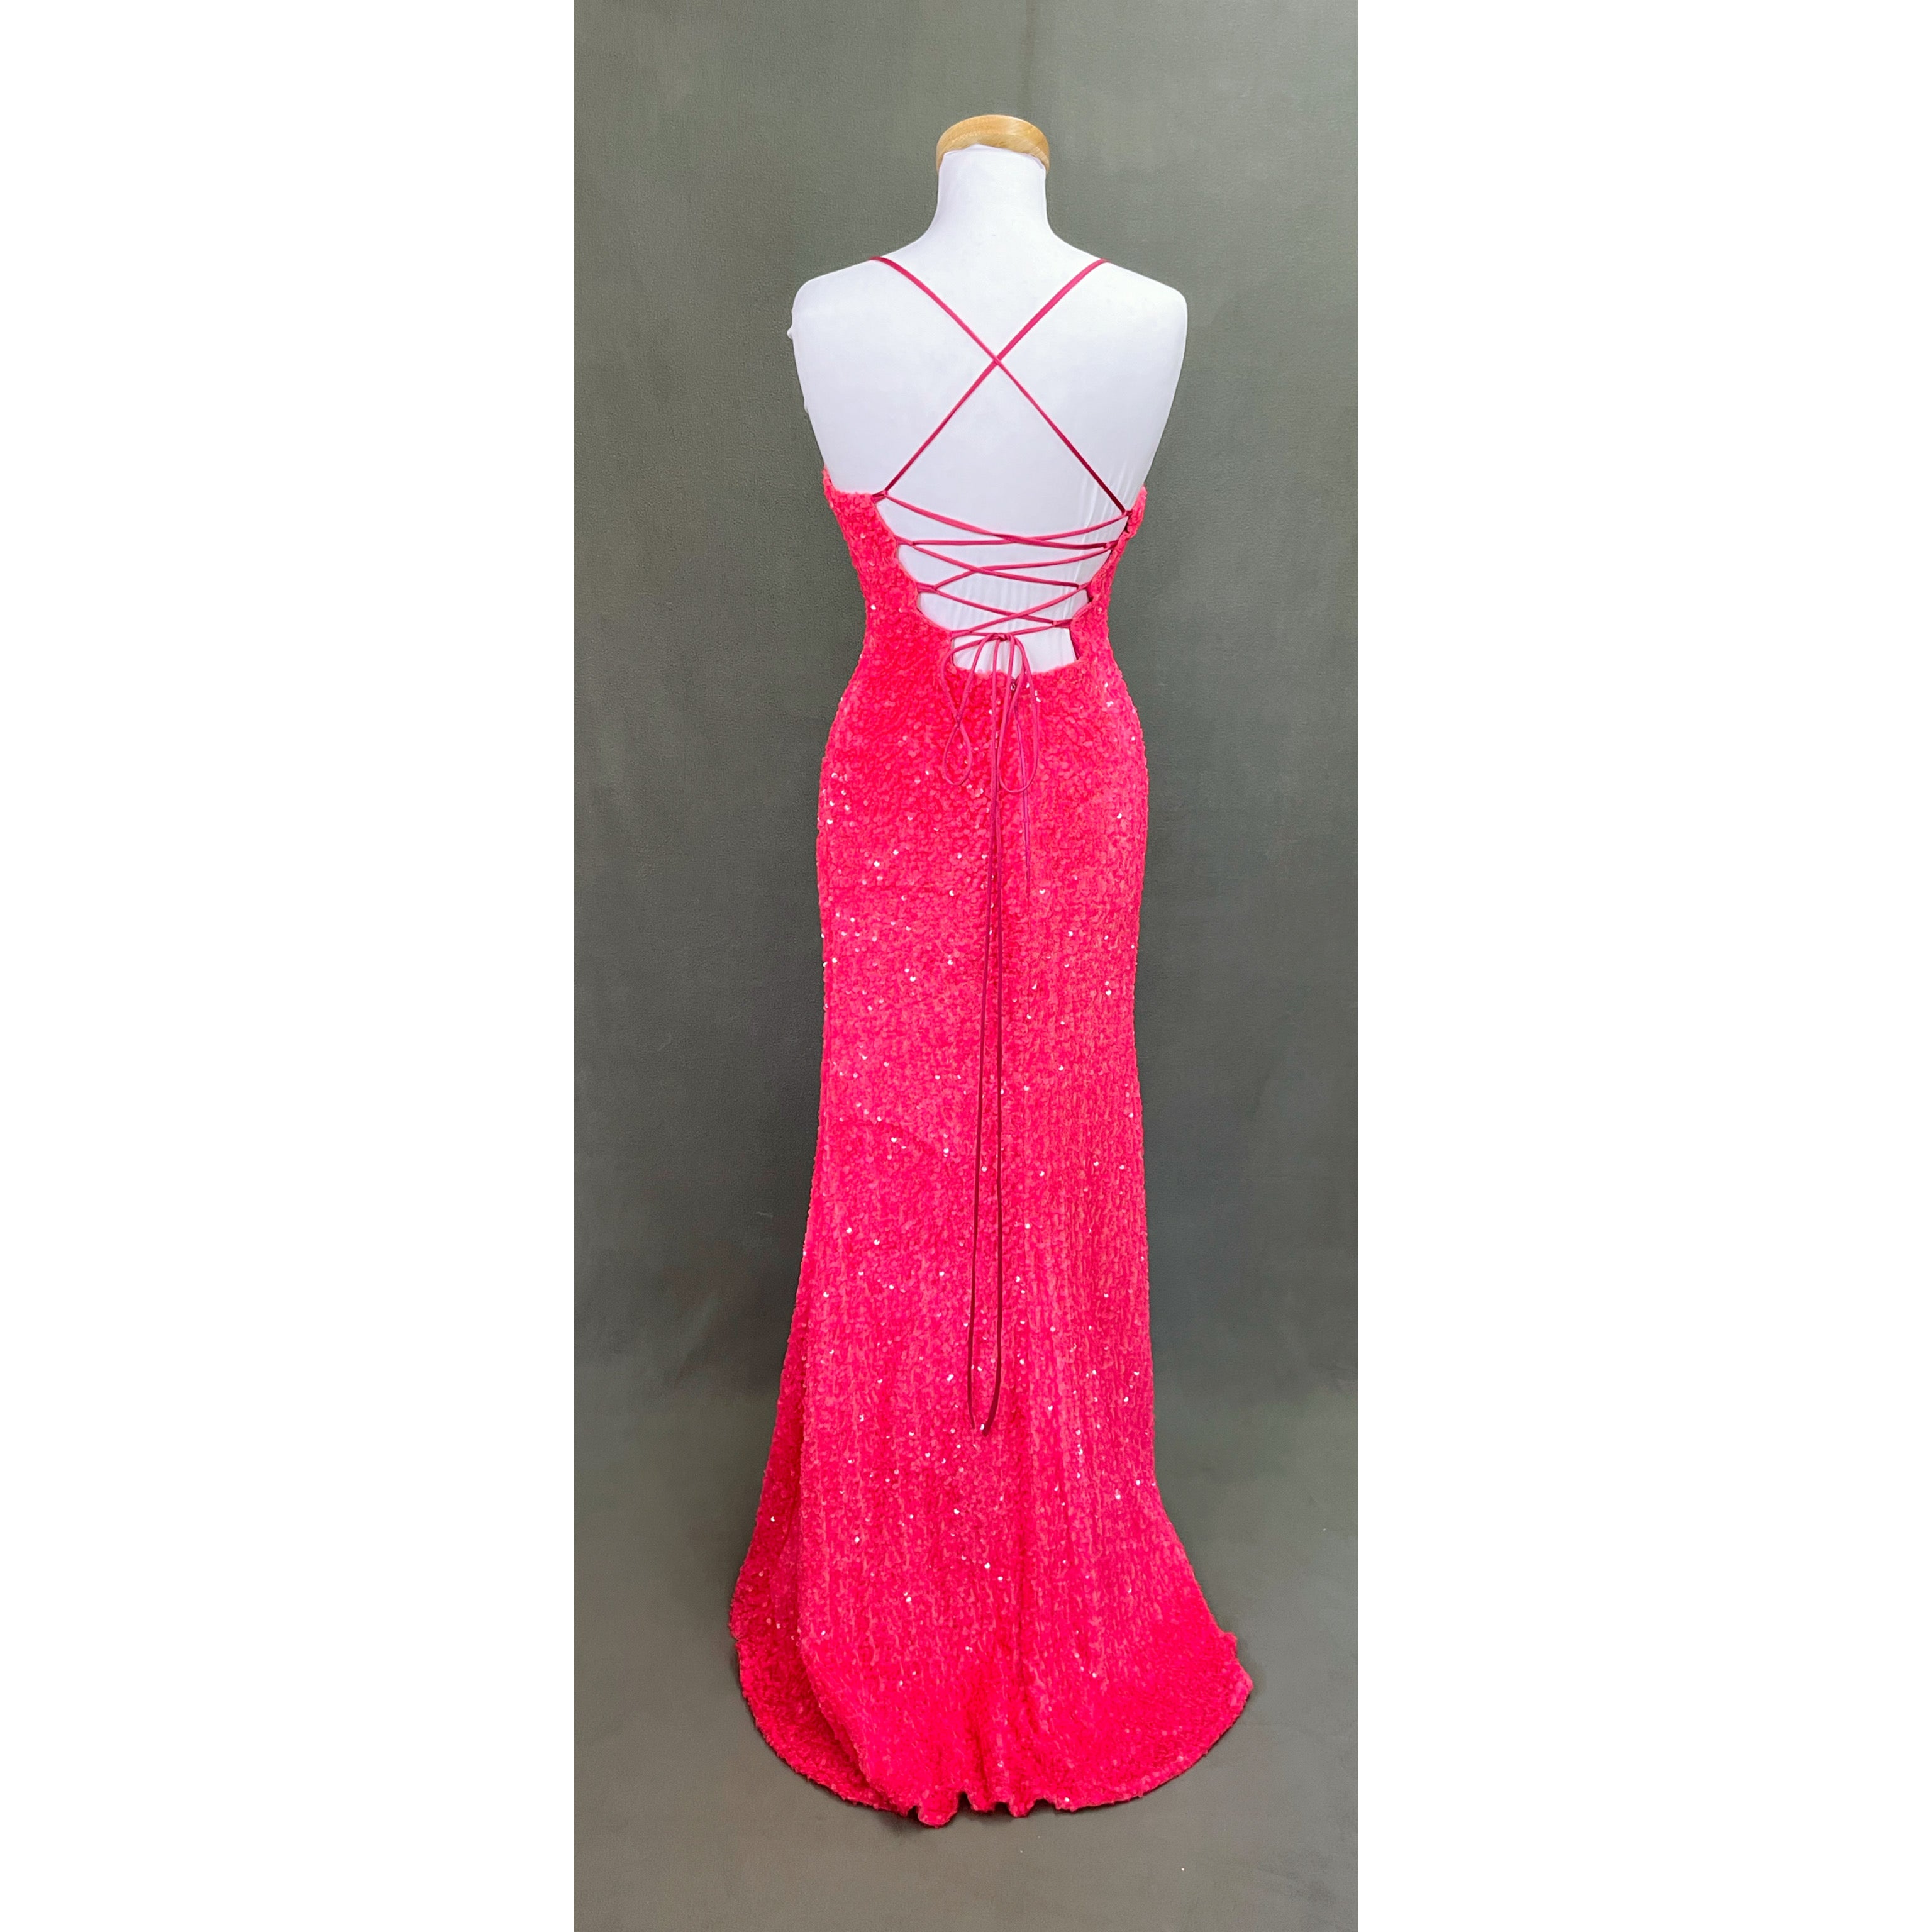 Neon pink sequin dress, size M